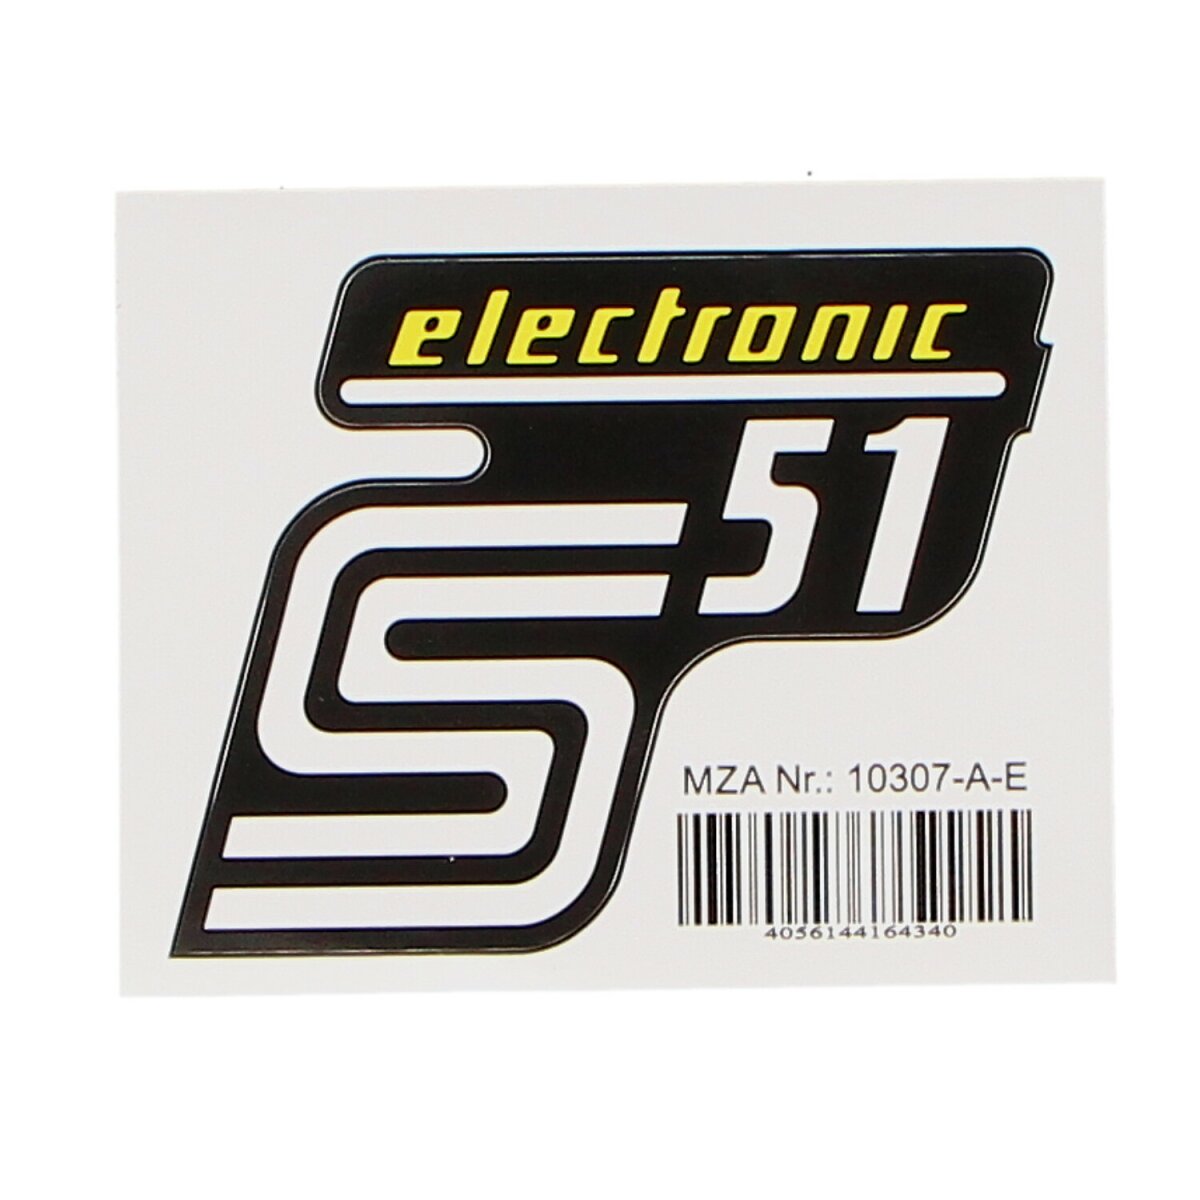 Aufkleber Seitendeckel Simson S51 electronic gelb